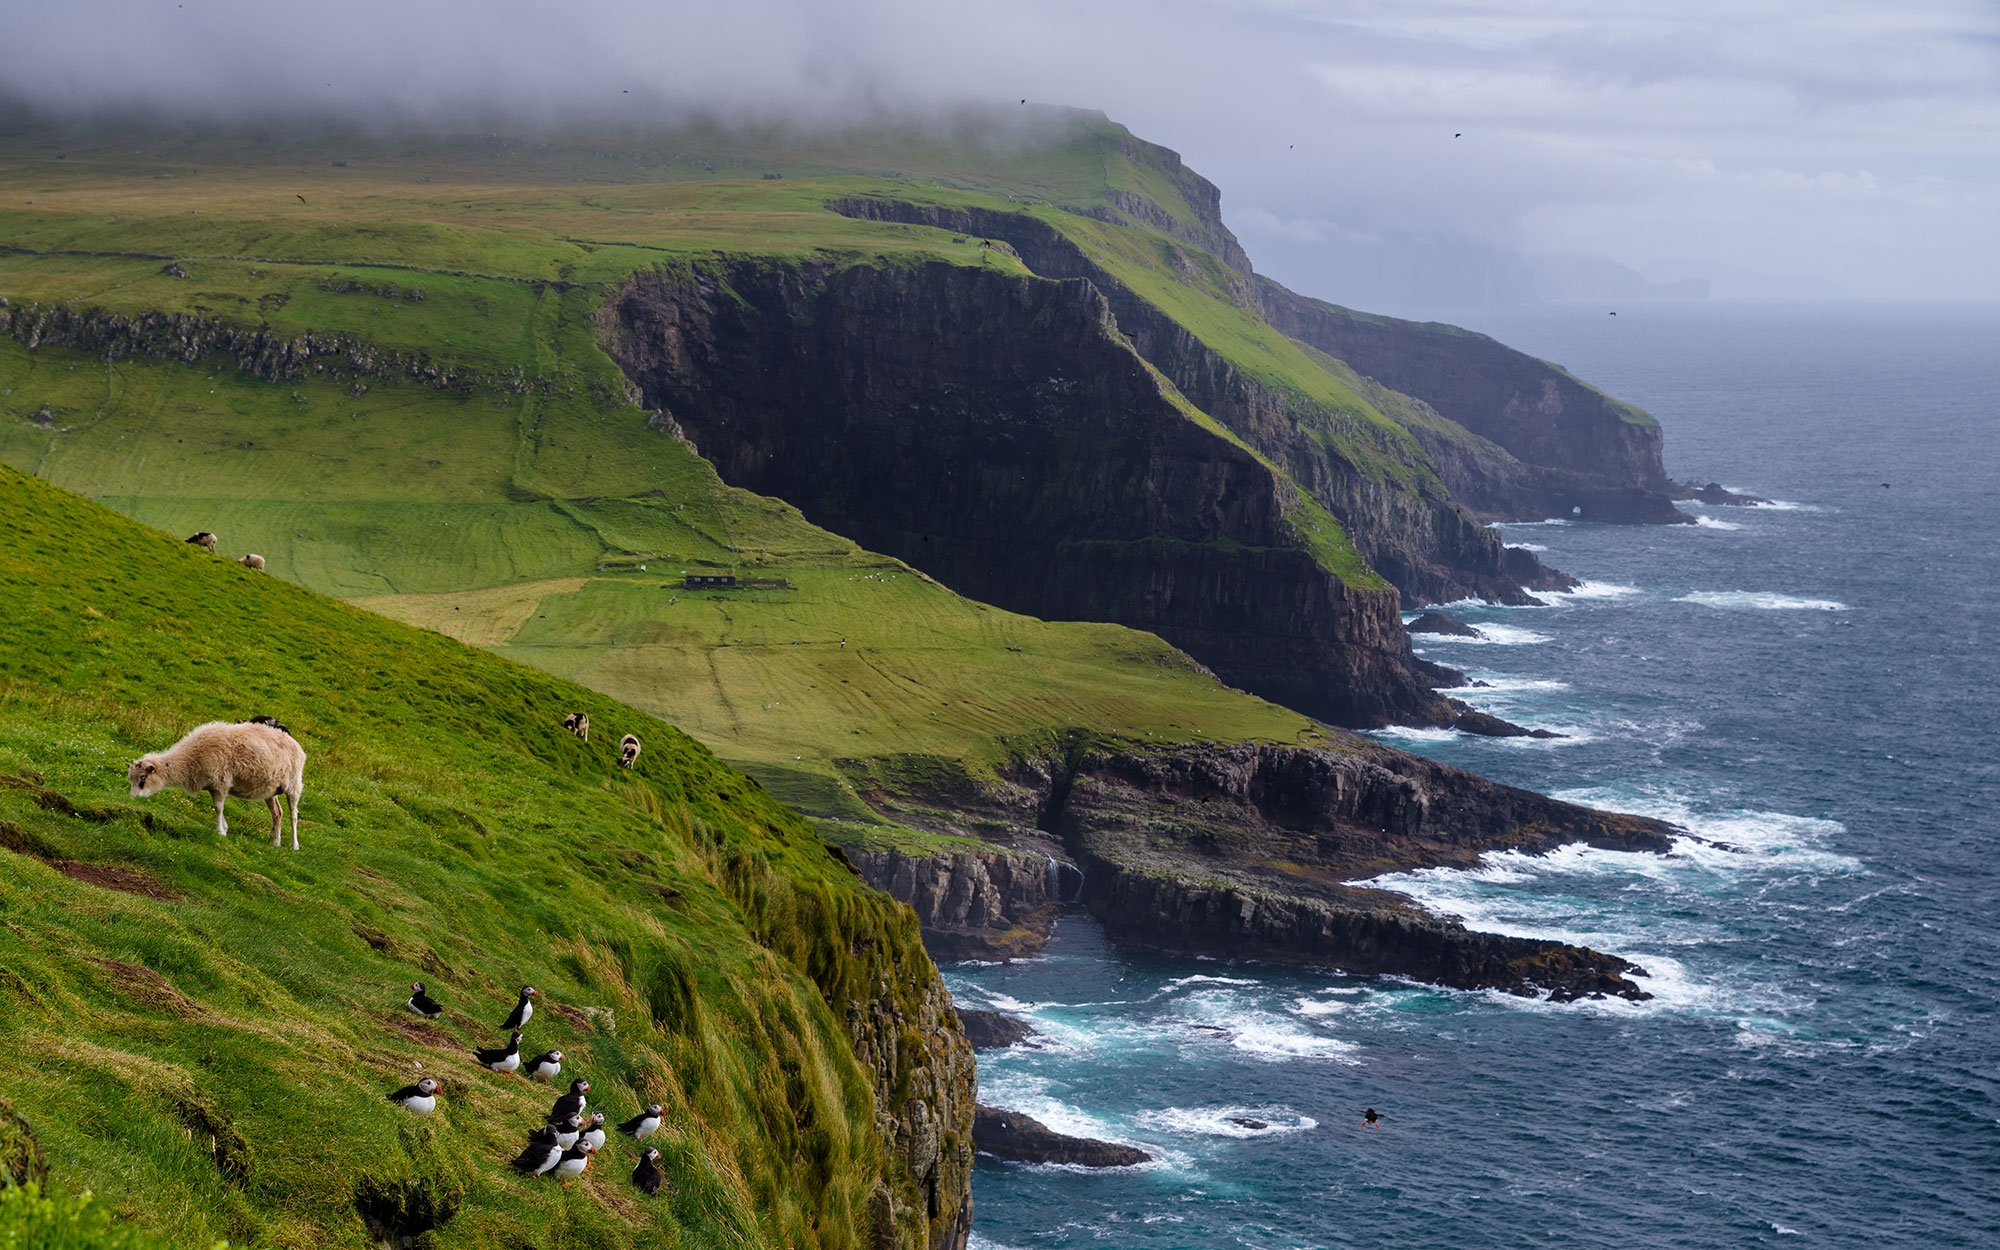 Grassy cliffs of the Faroe Islands.